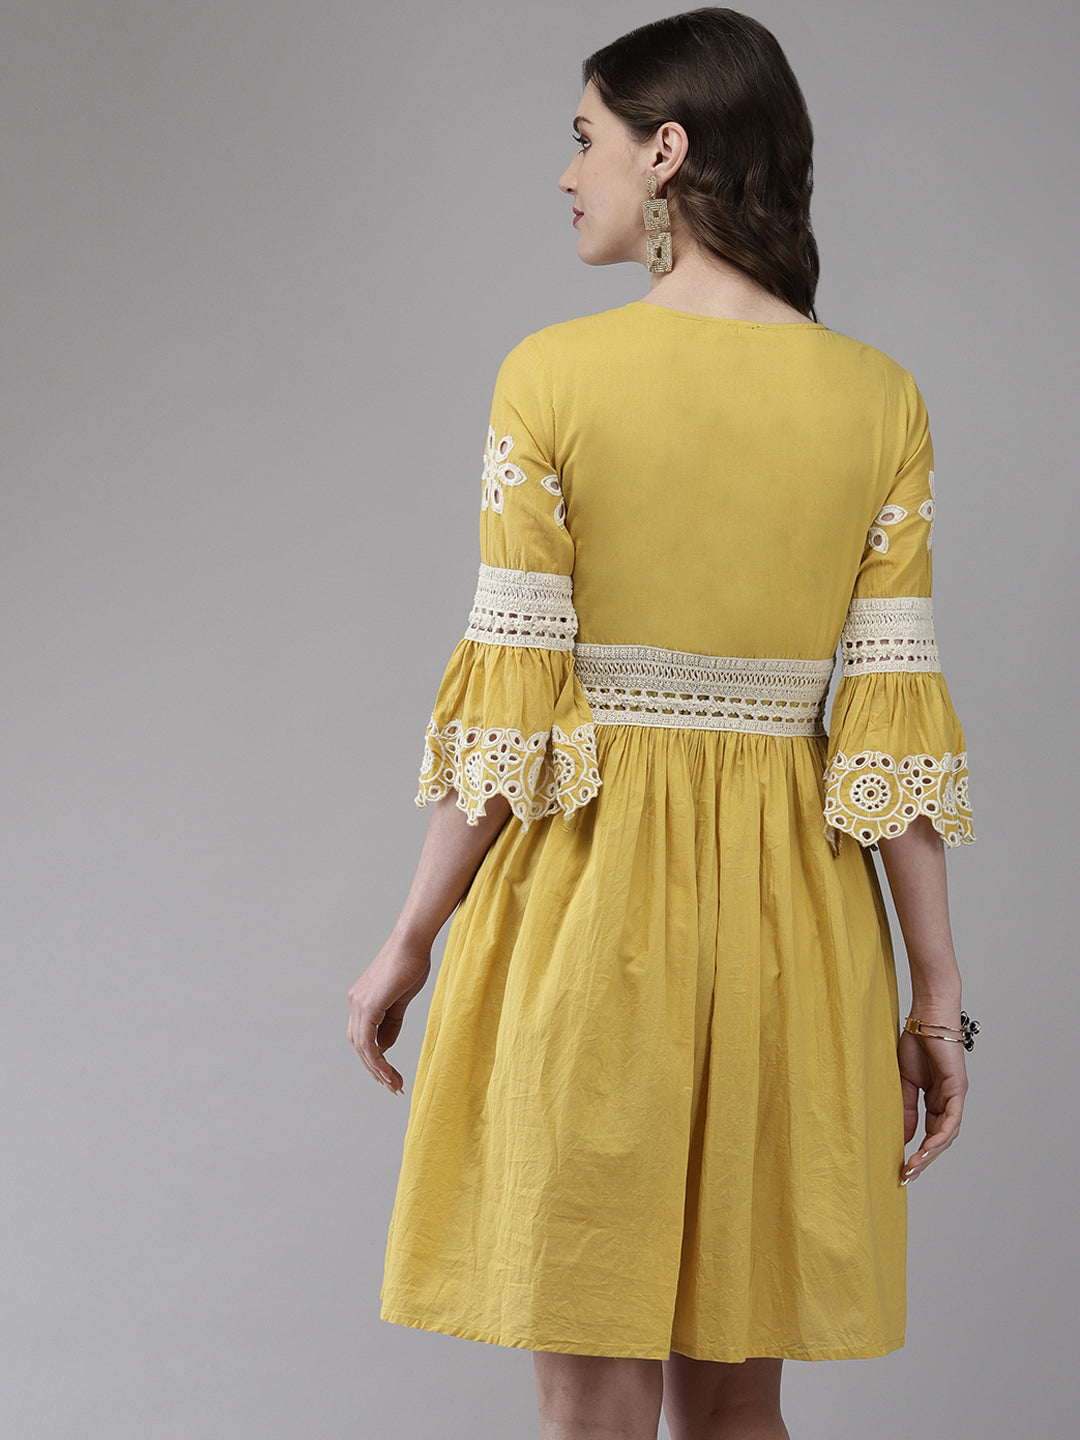 Ishin Women's Cotton Mustard Schiffli Embroidered A-Line Dress